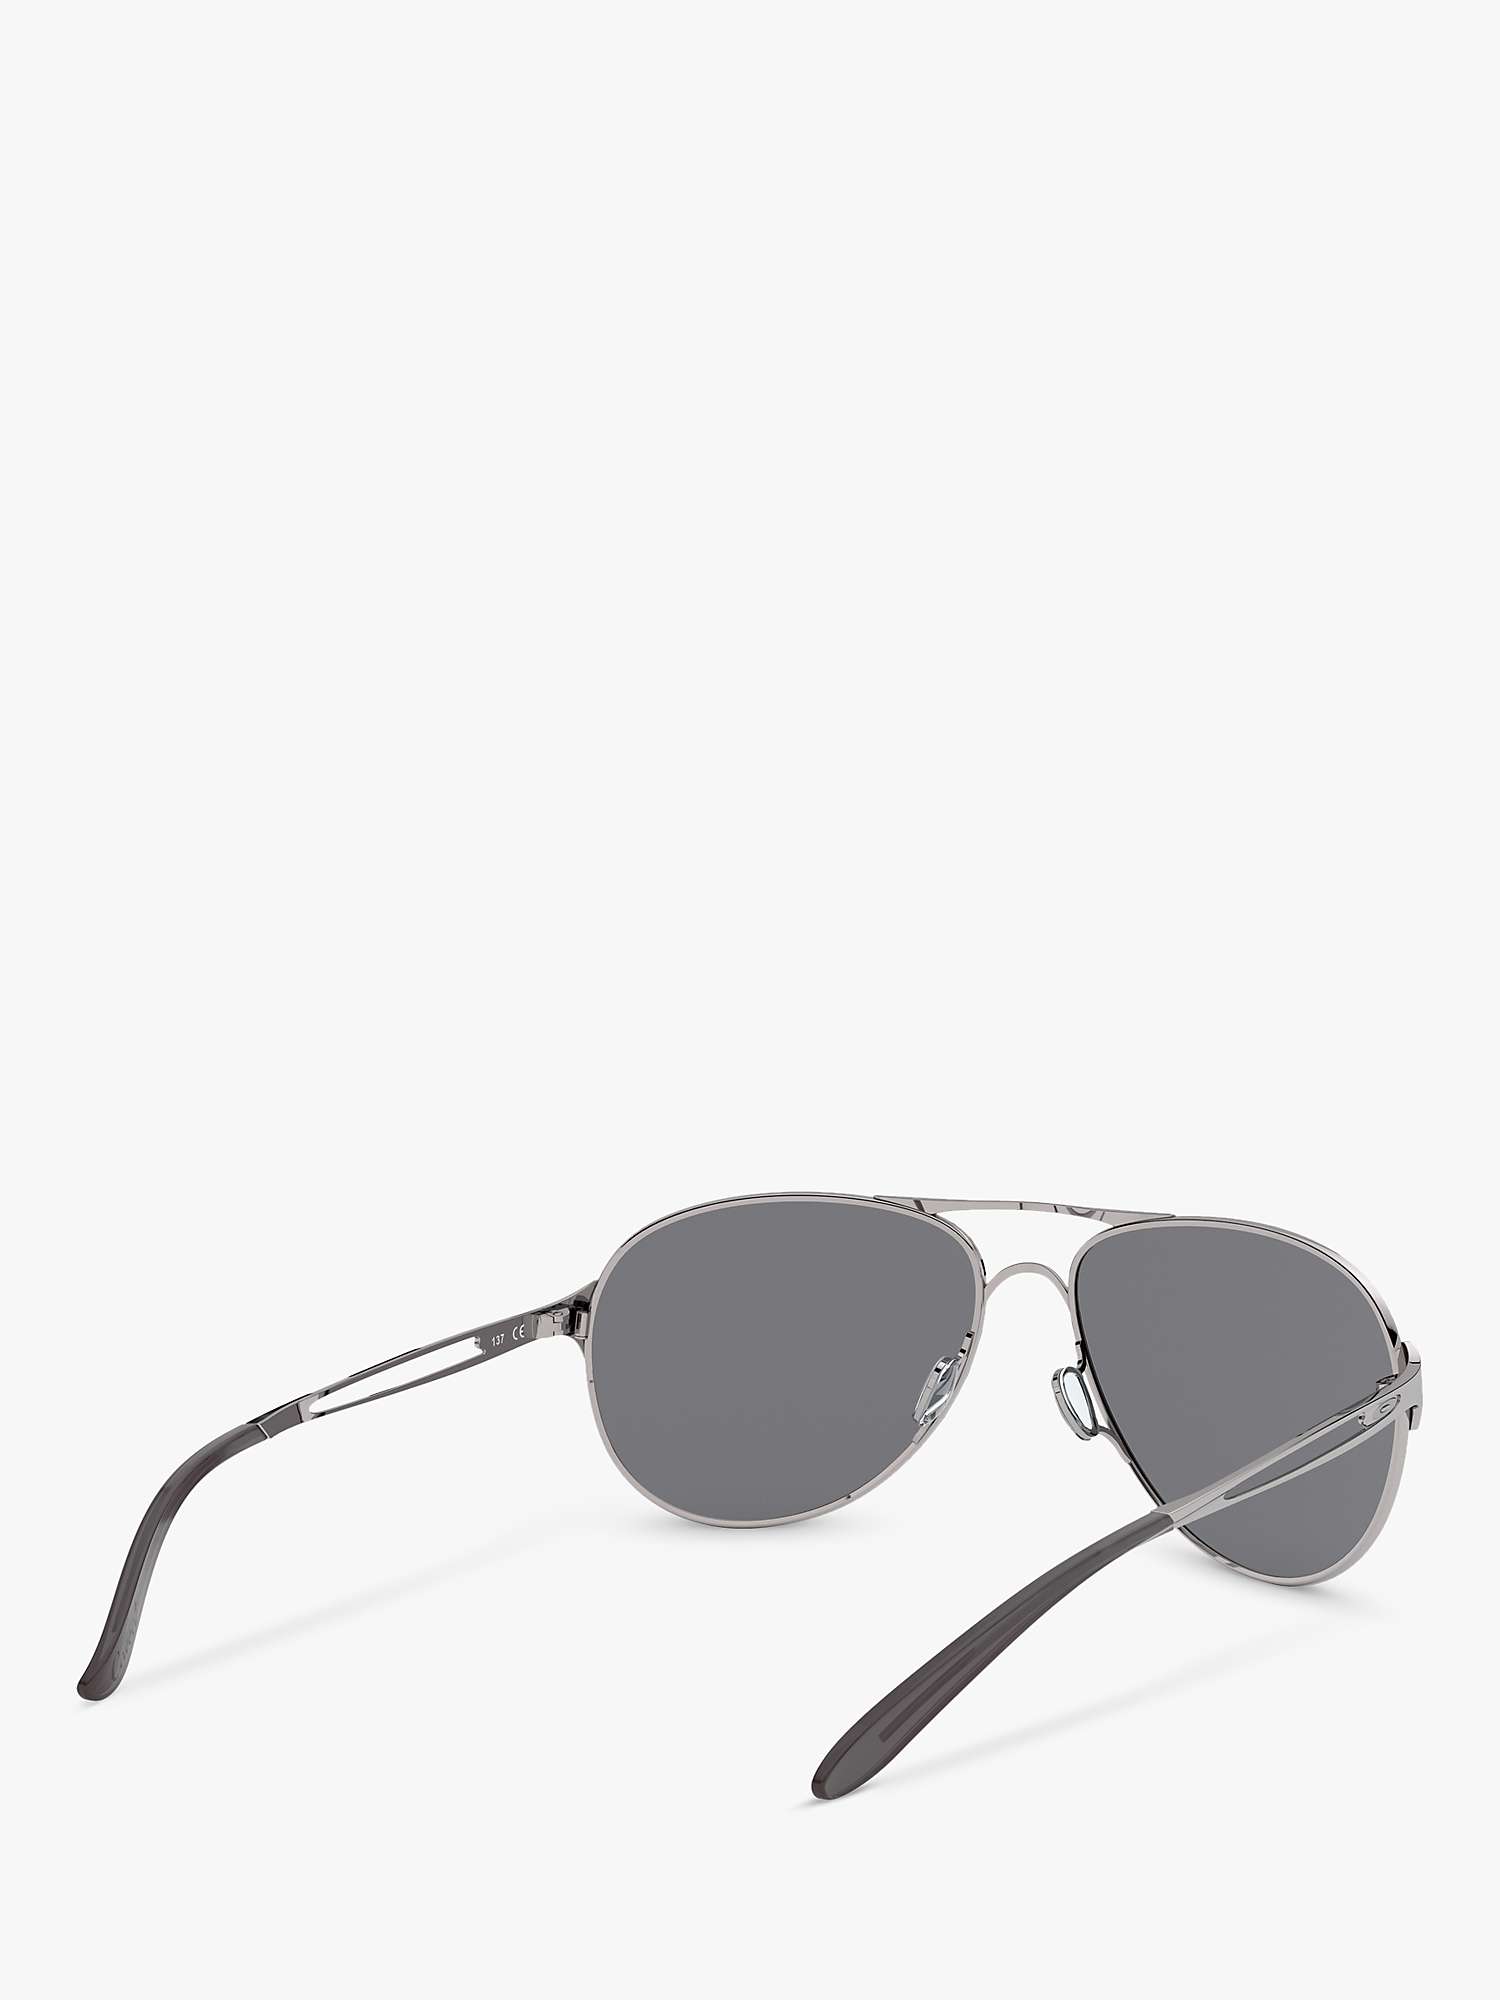 Buy Oakley OO4054 Women's Caveat Pilot Sunglasses, Polished Chrome/Grey Online at johnlewis.com